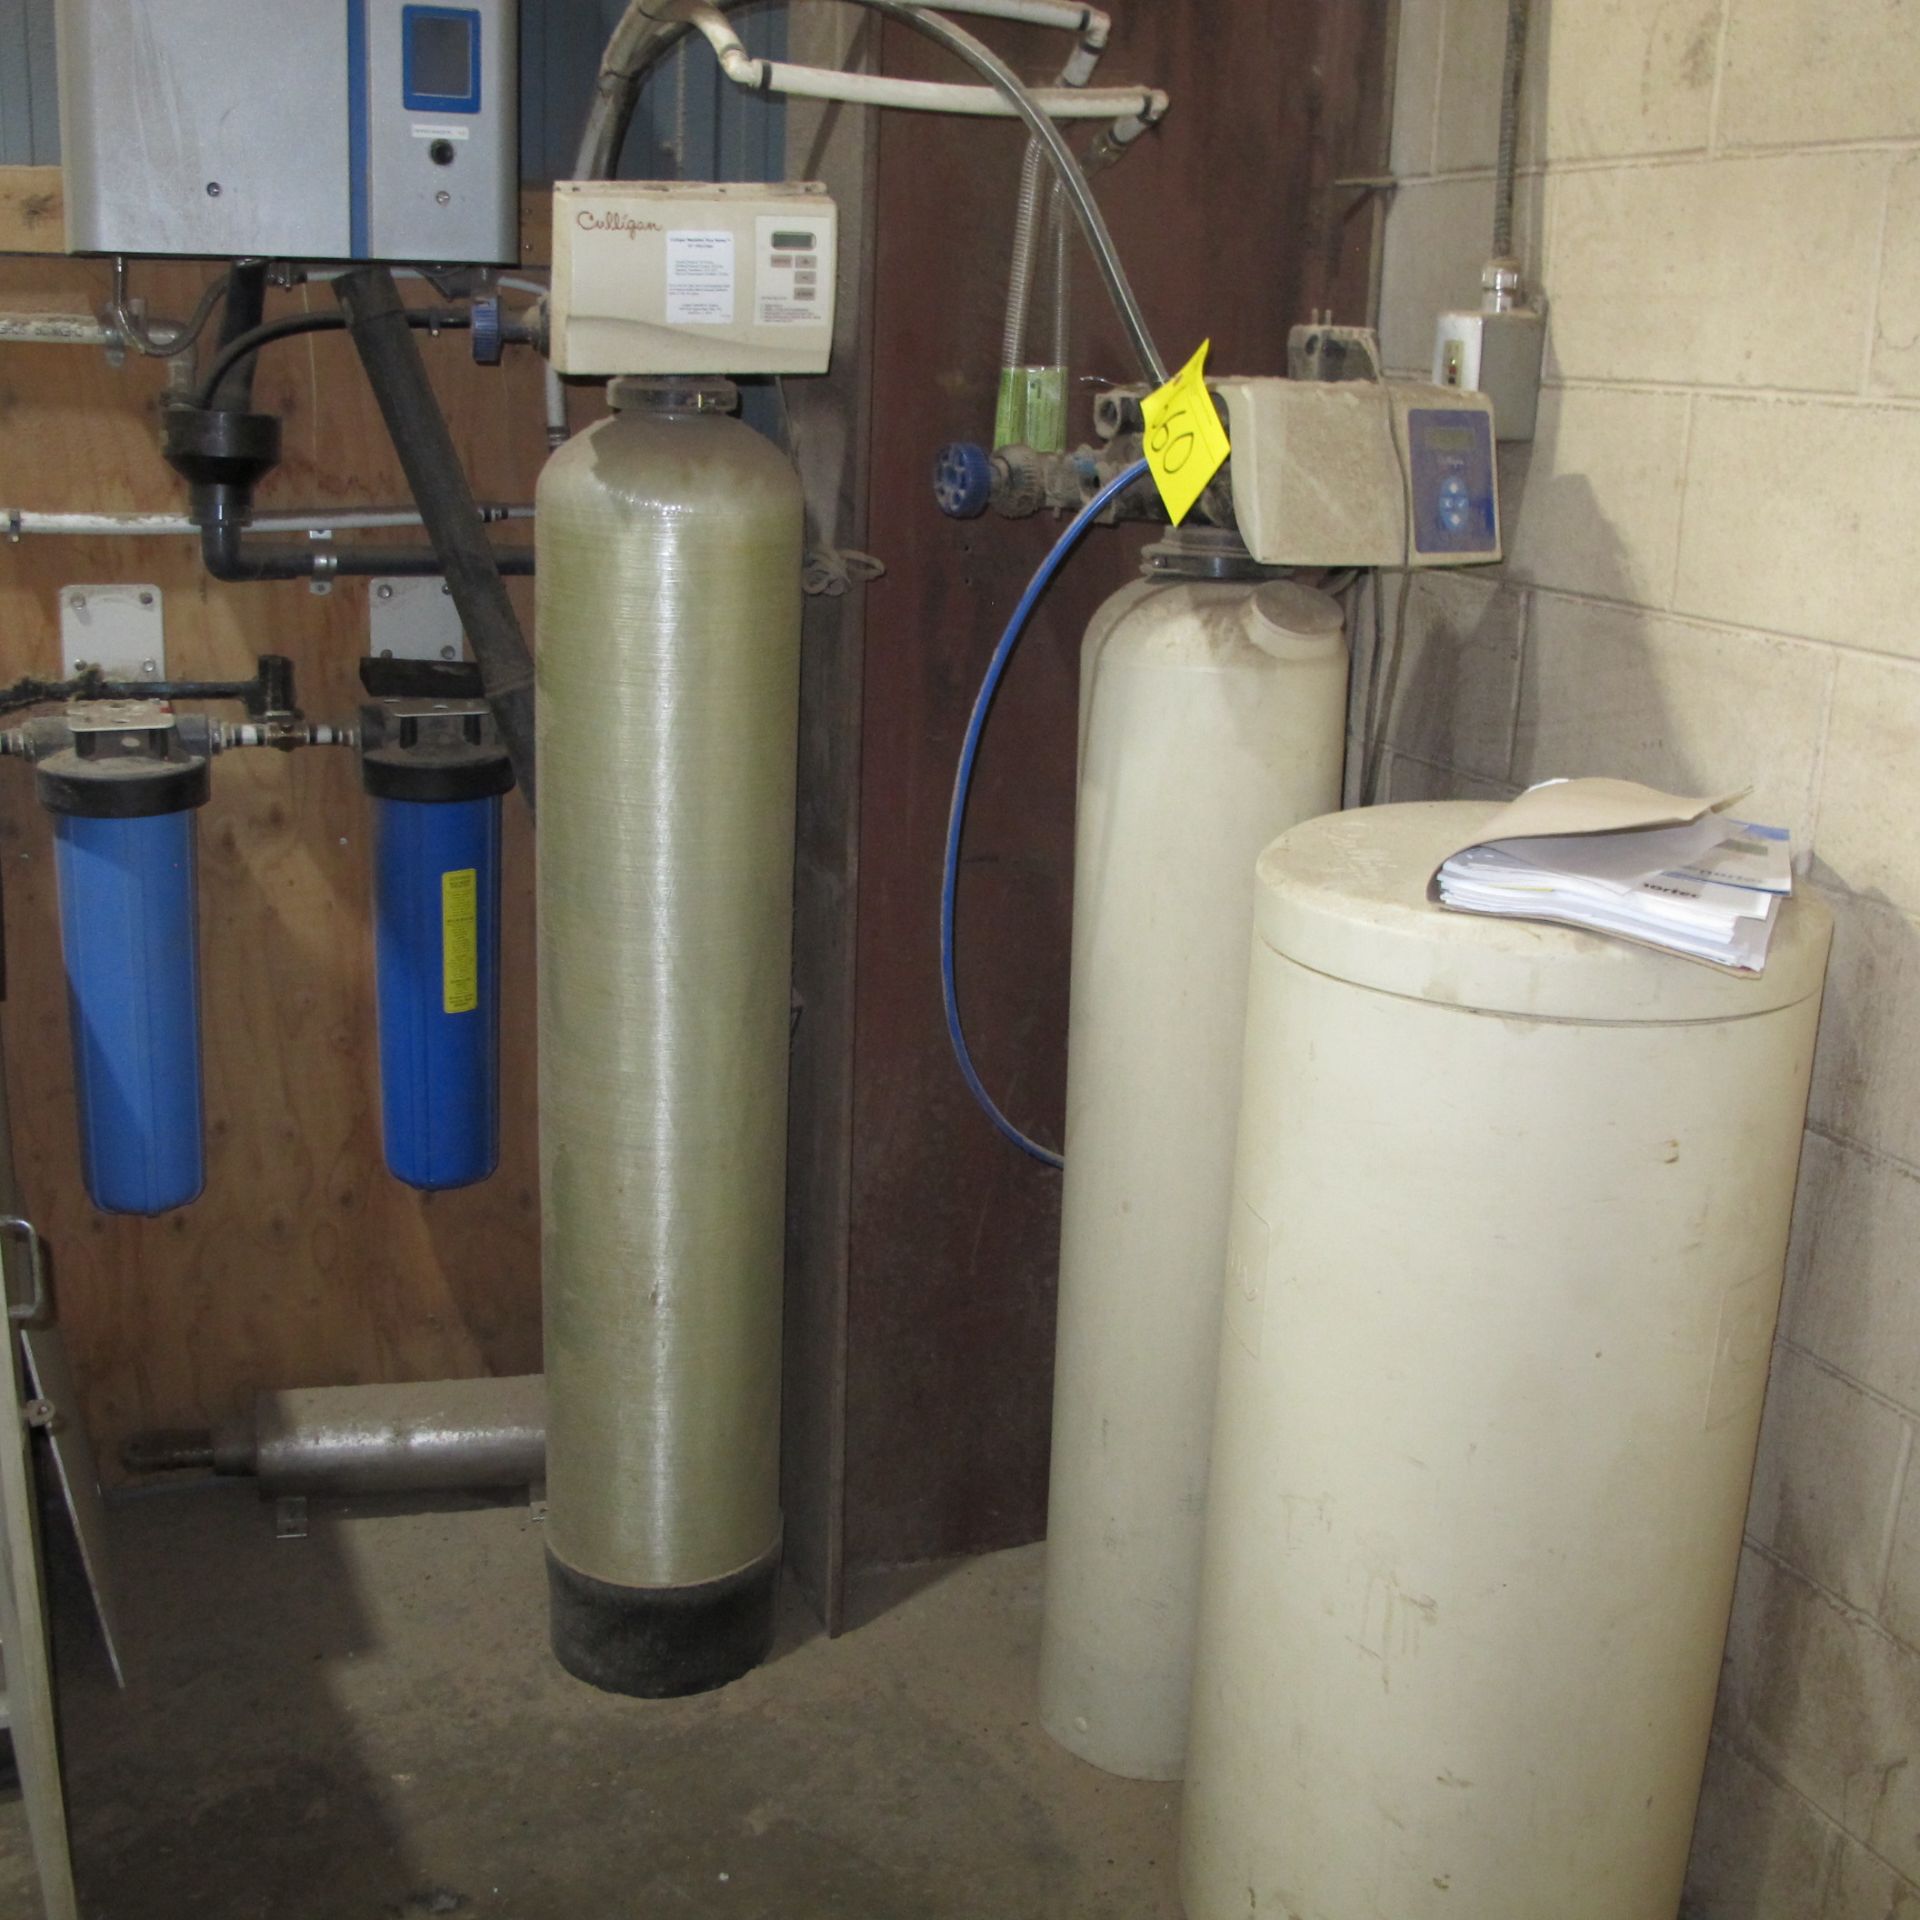 PEDESTAL INDUSTRIAL FAN, CULLIGAN WATER SOFTENER SYSTEM, SAFETY SUPPLIES, ETC. (WEST BUILDING, UPPER - Image 2 of 4